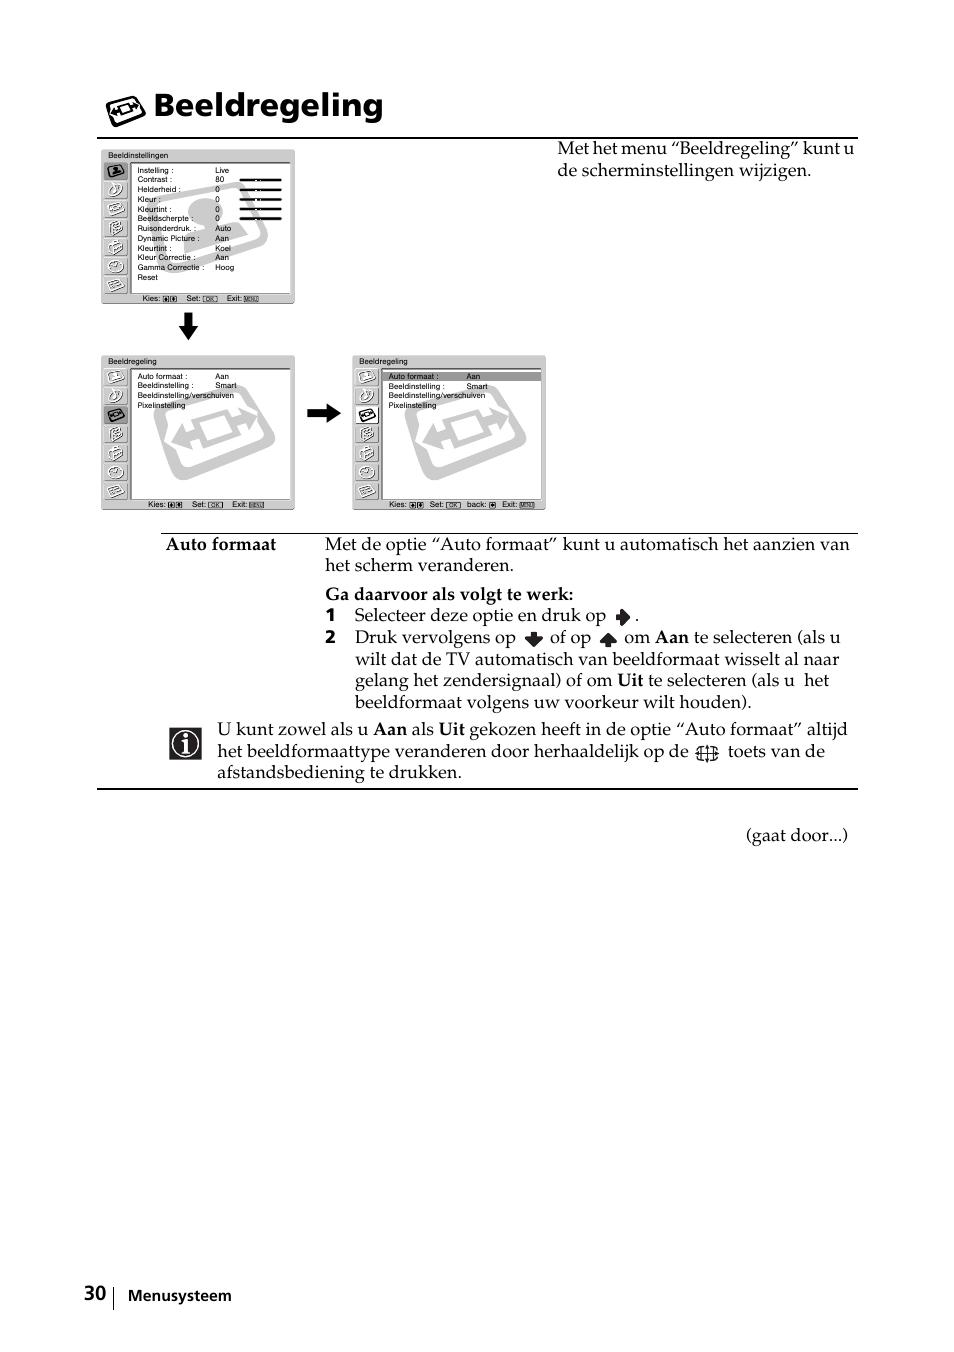 Beeldregeling, Gaat door...) | Sony KE-42MR1 Manuale d'uso | Pagina 106 / 302